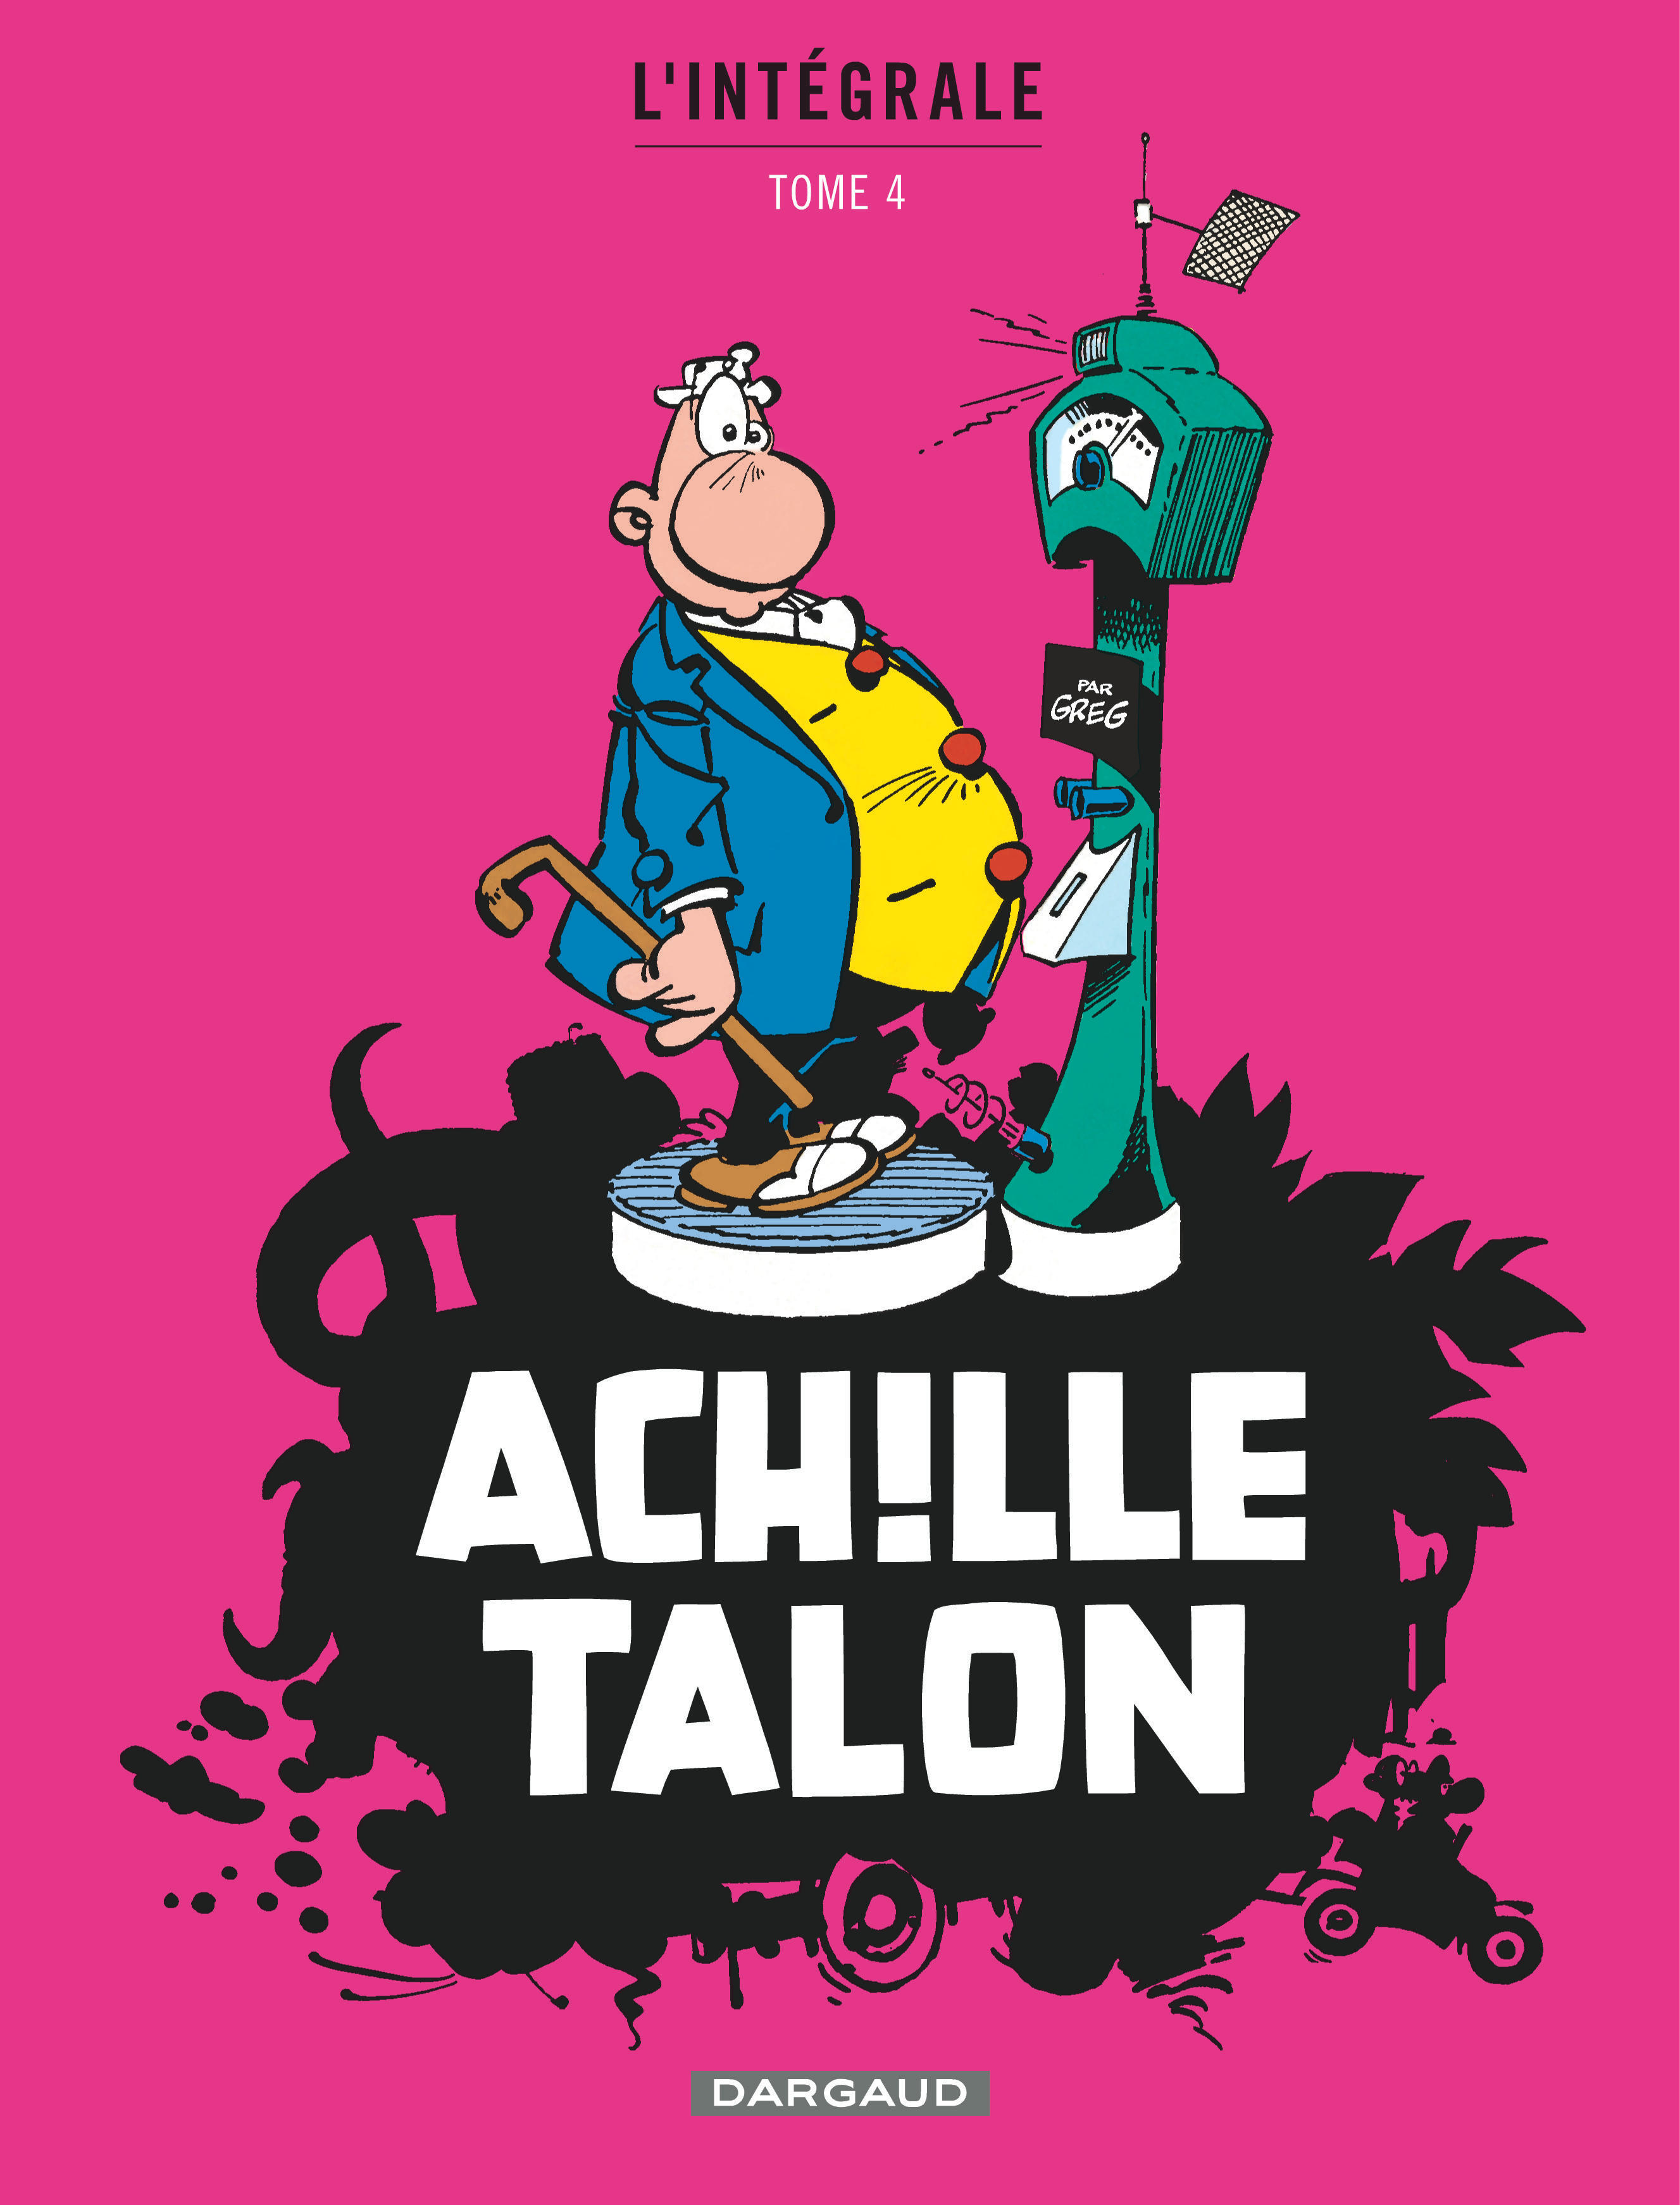 Achille Talon - Intégrales – Tome 4 – Mon Oeuvre à moi - tome 4 - couv